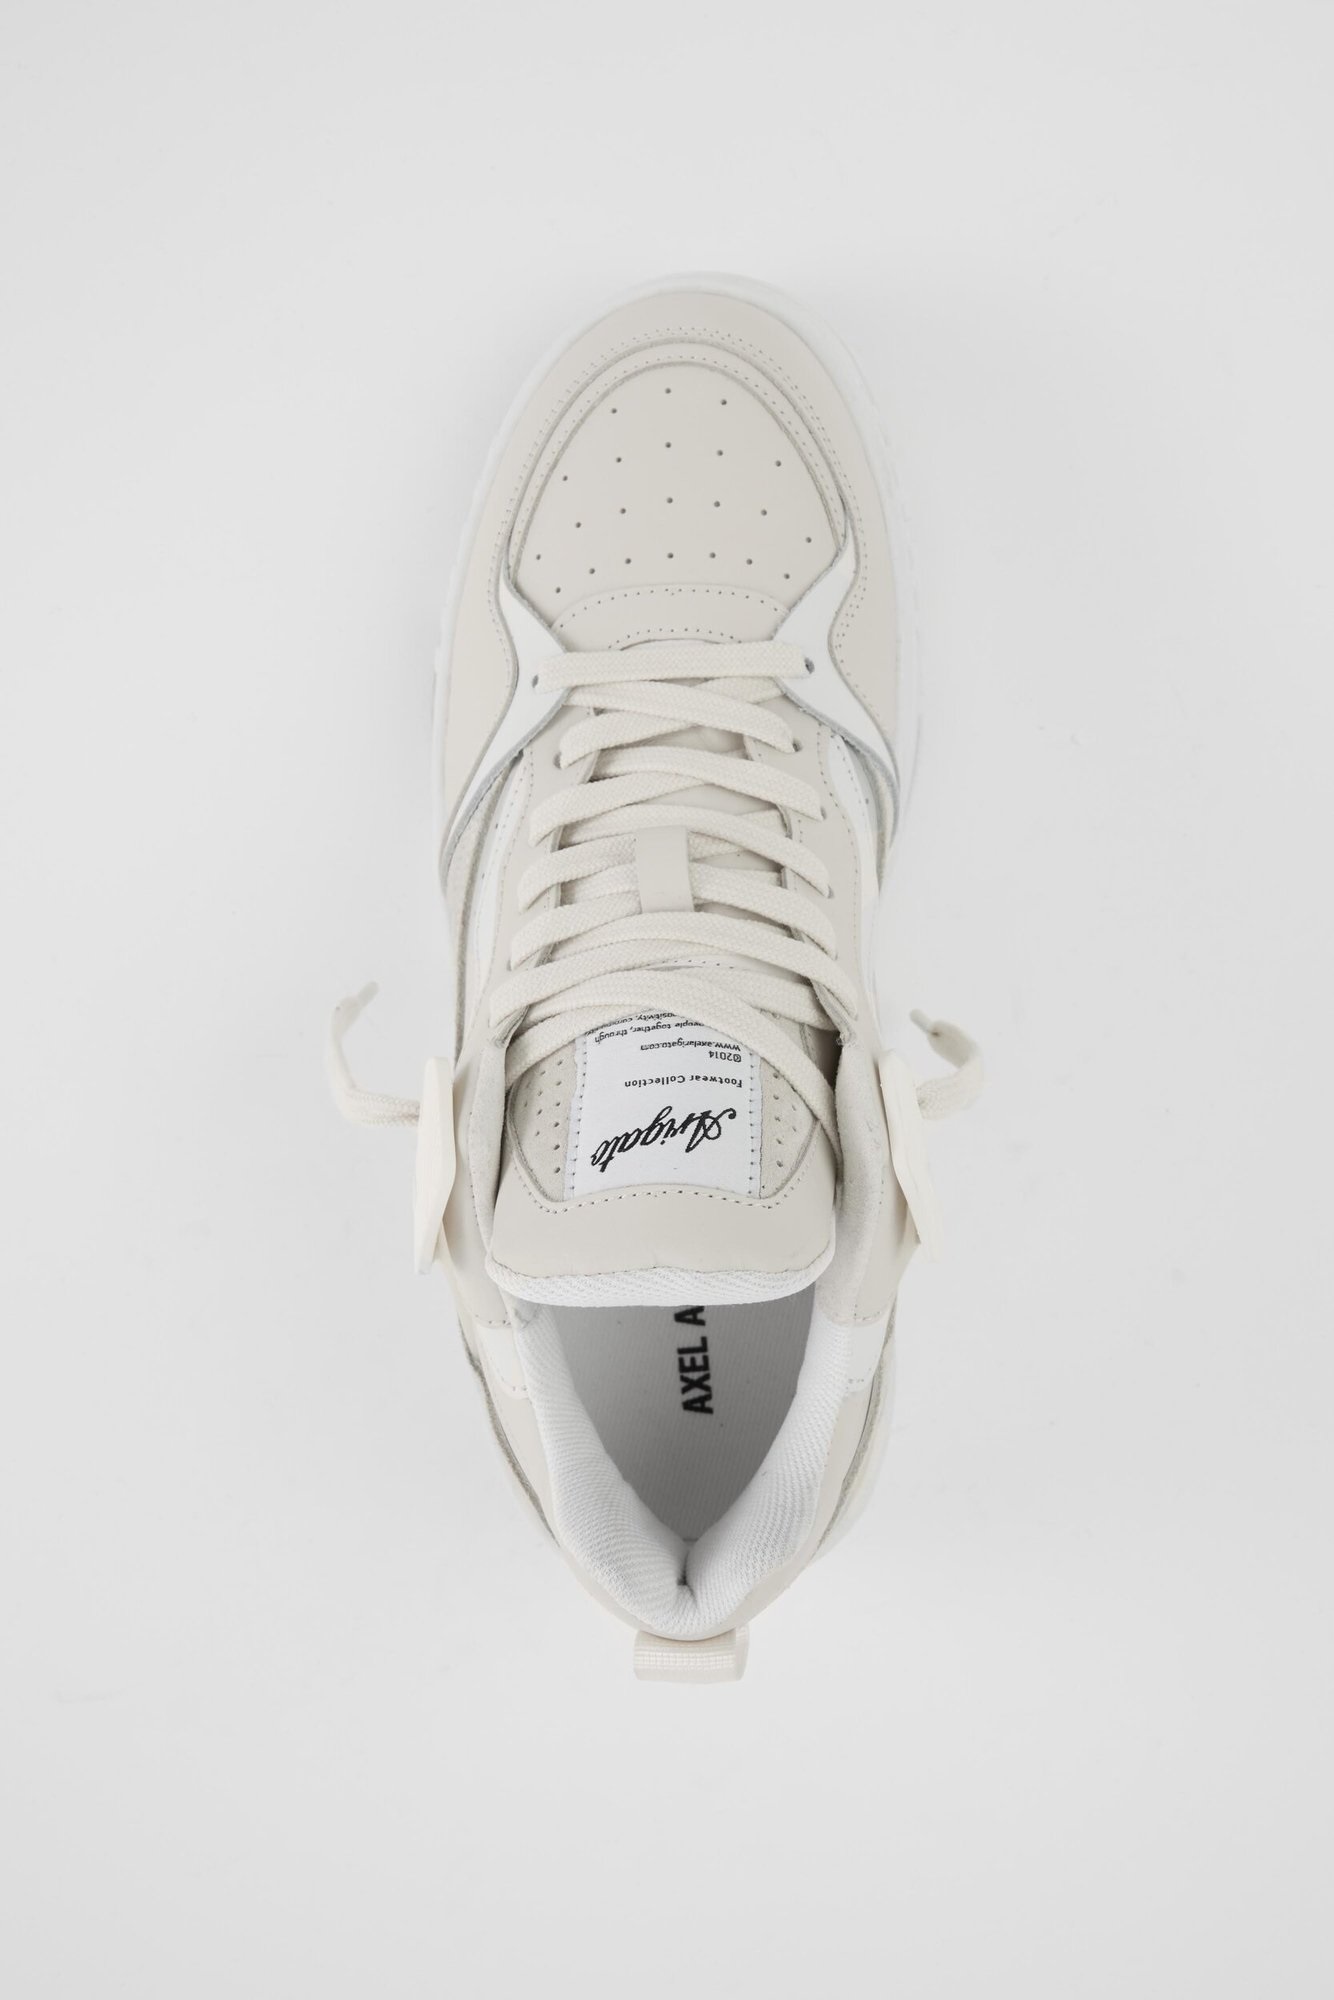 AXEL ARIGATO Astro Sneaker in Beige/White  42